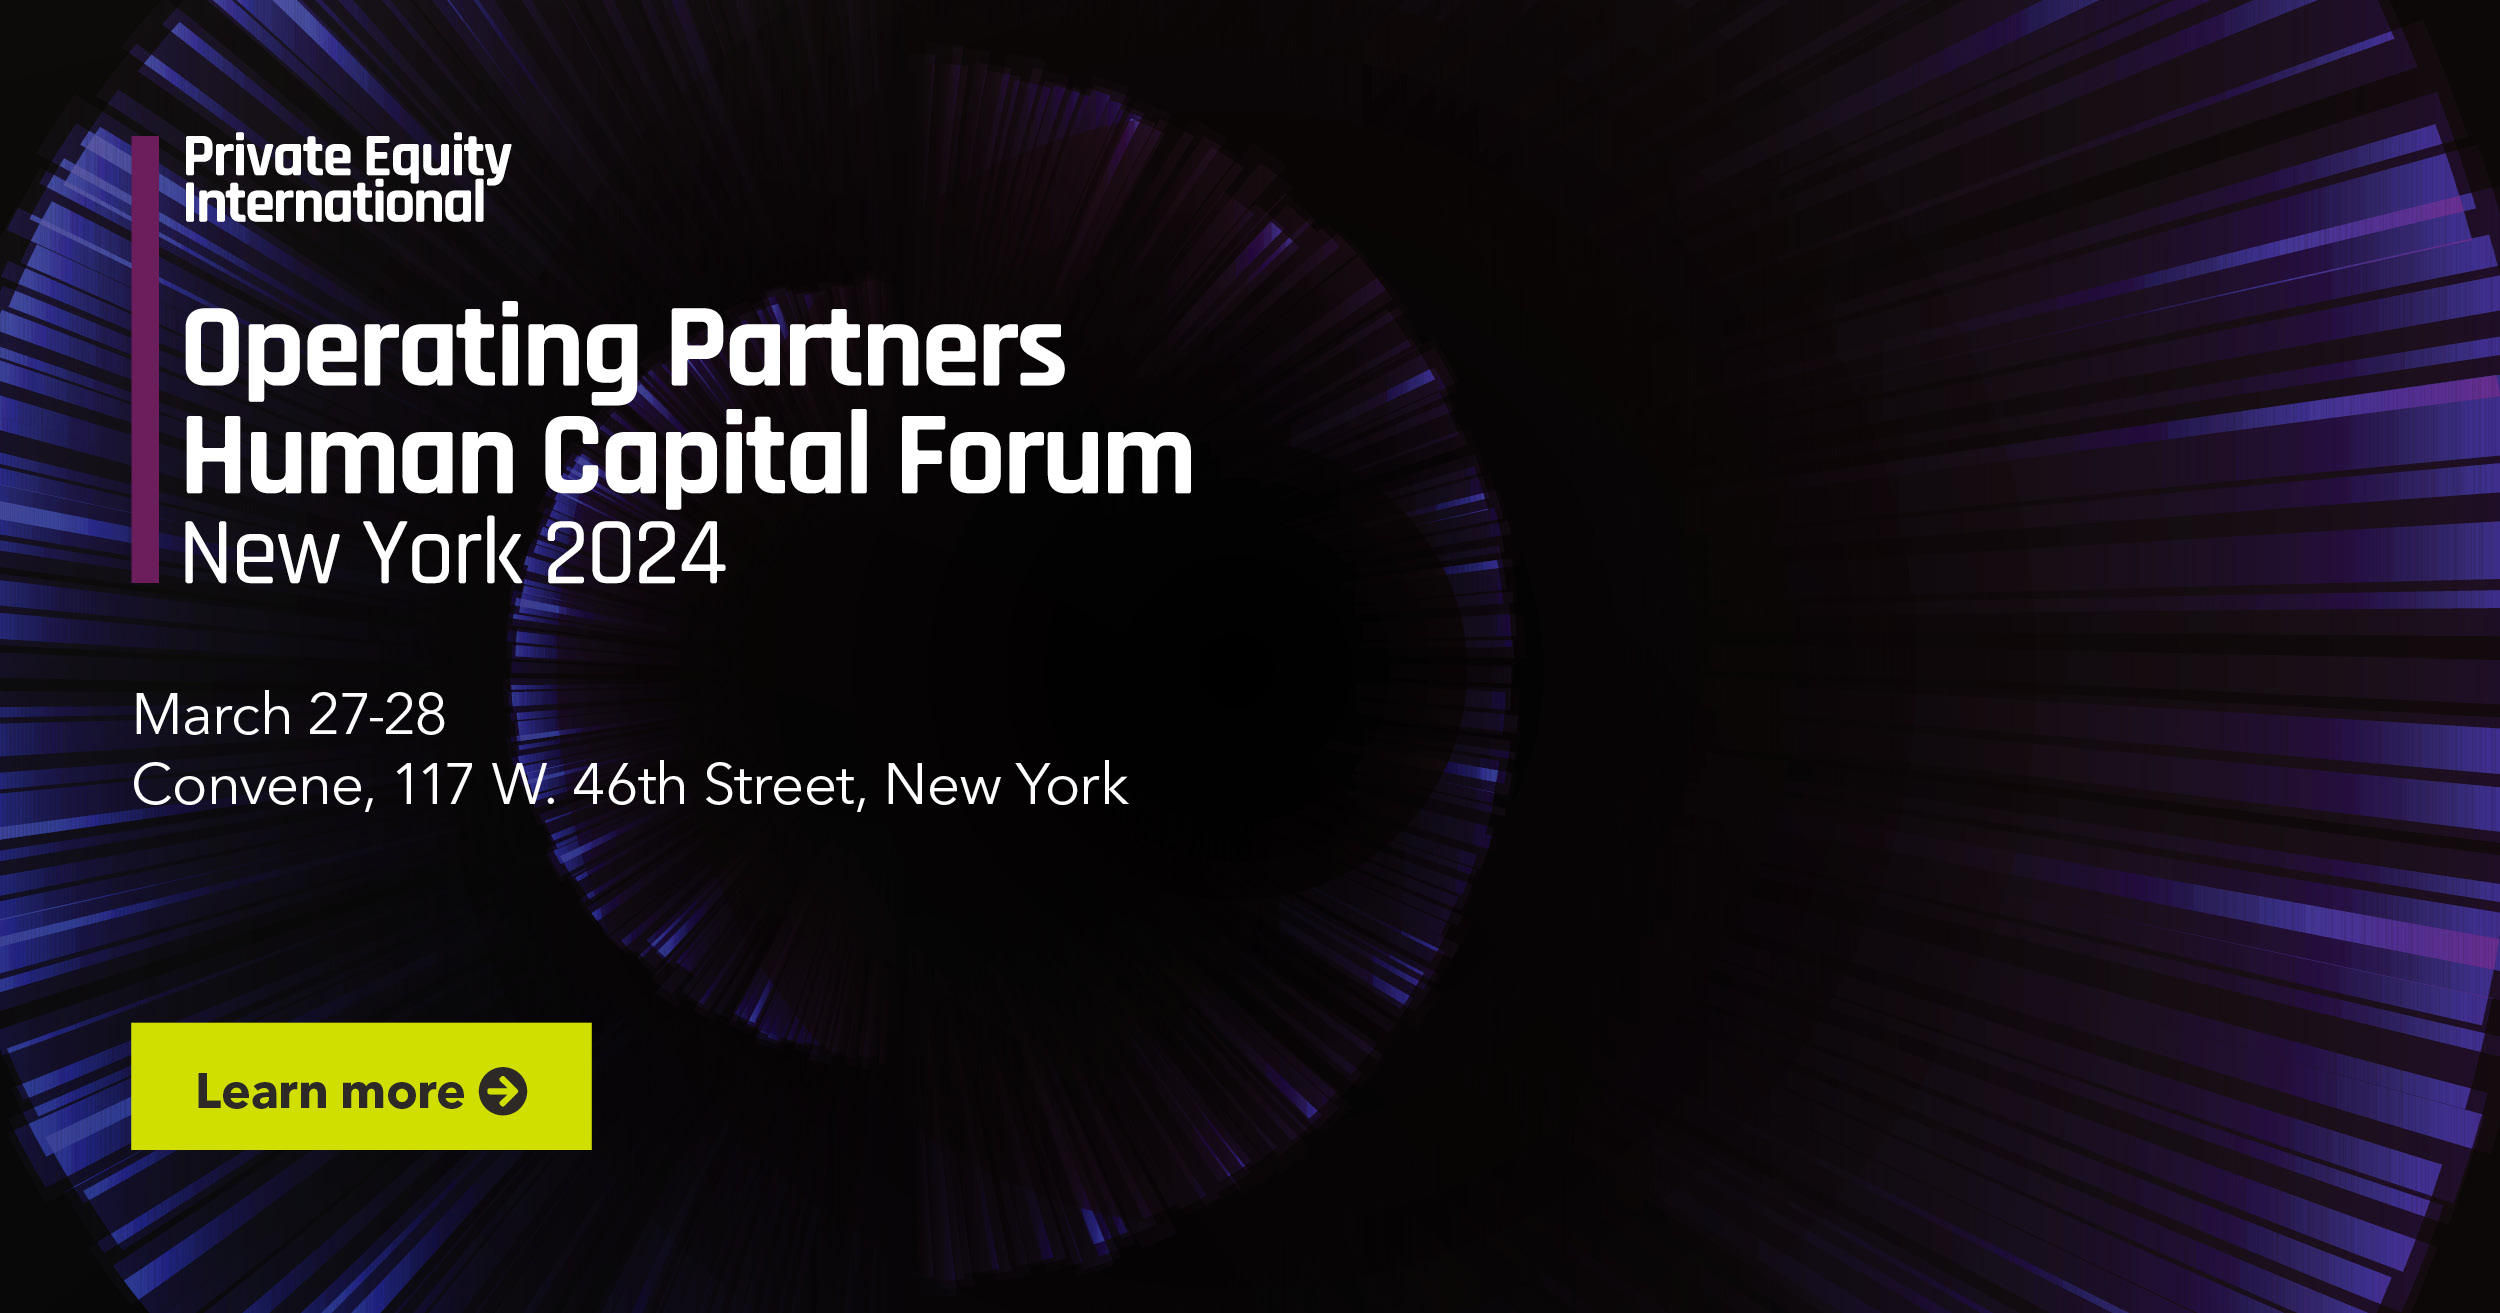 PEI Operating Partners Human Capital Forum